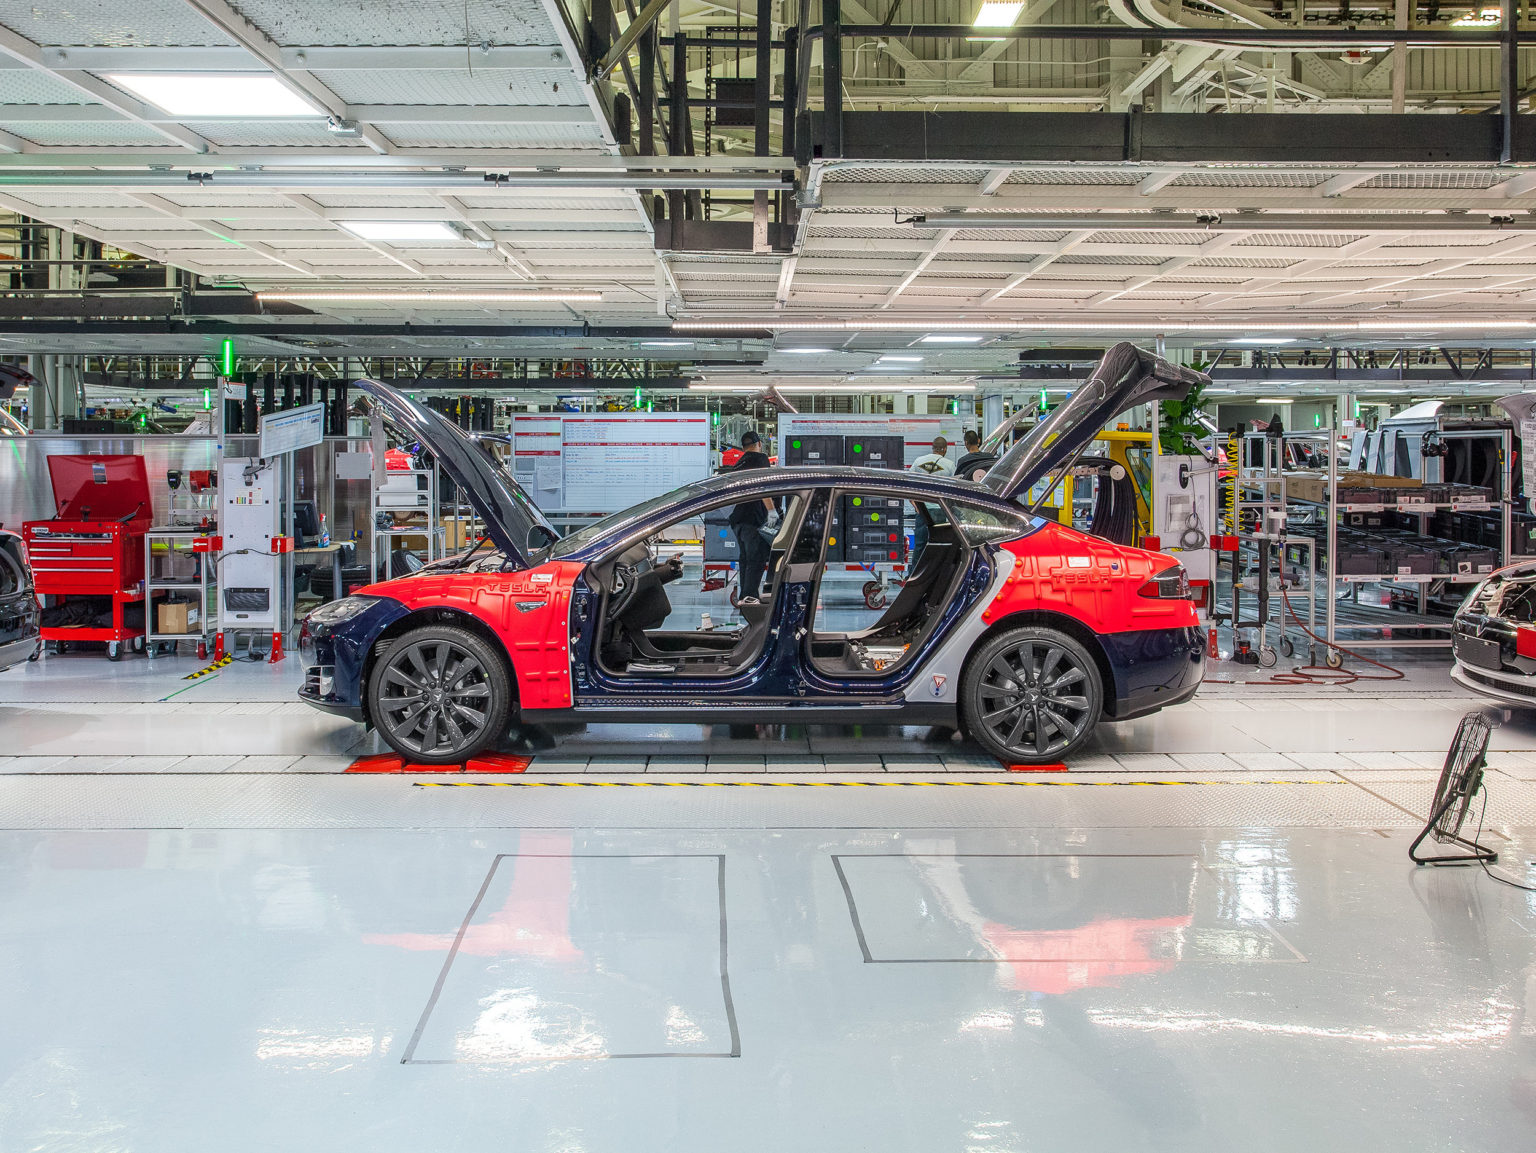 Tesla's Fremont, California factory employs around 10,000 people.